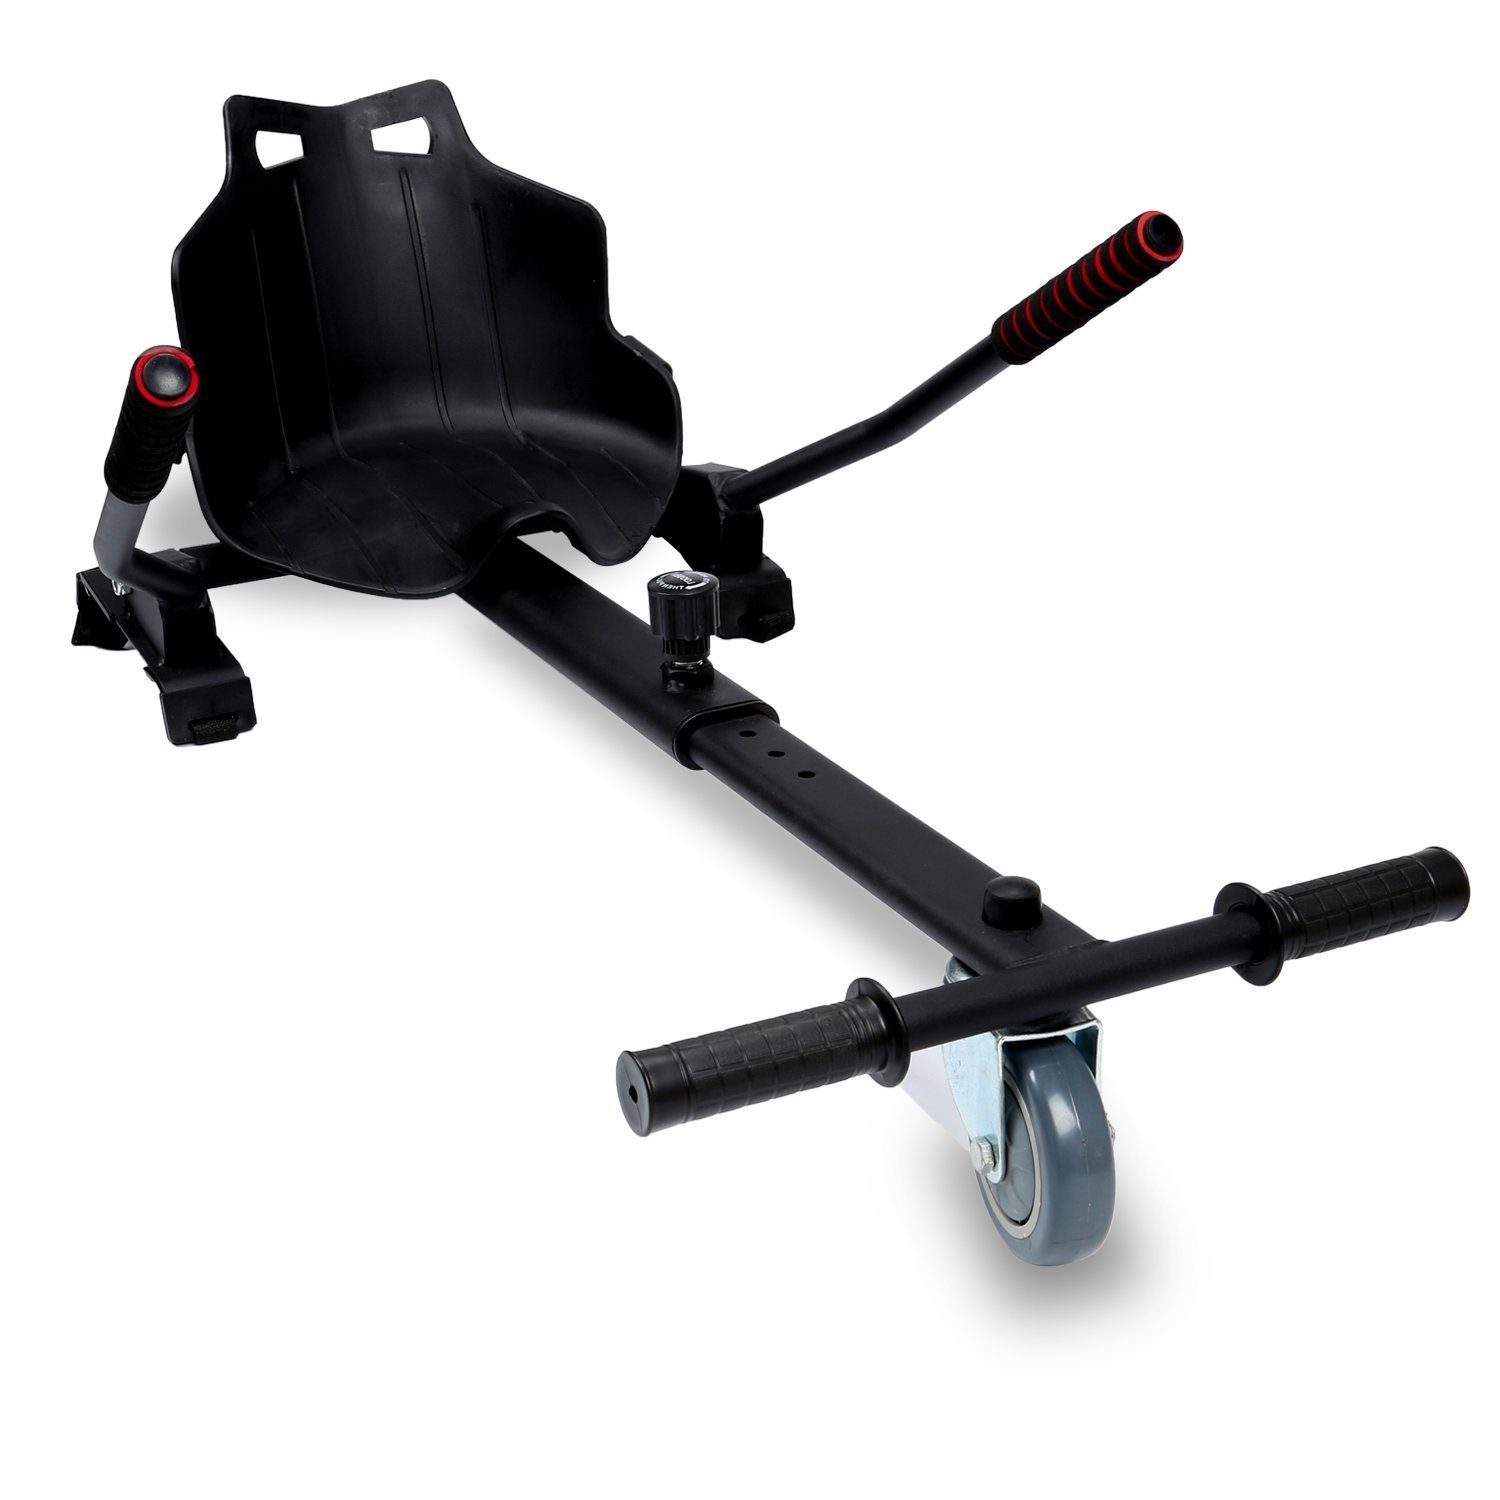 https://i.otto.de/i/otto/f43ec076-a998-442f-9bcb-ef787705e36e/clanmacy-balance-scooter-kart-hoverboard-sitz-sitzscooter-fuer-6-5-8-5-und-10-zoll-hoverboards.jpg?$formatz$